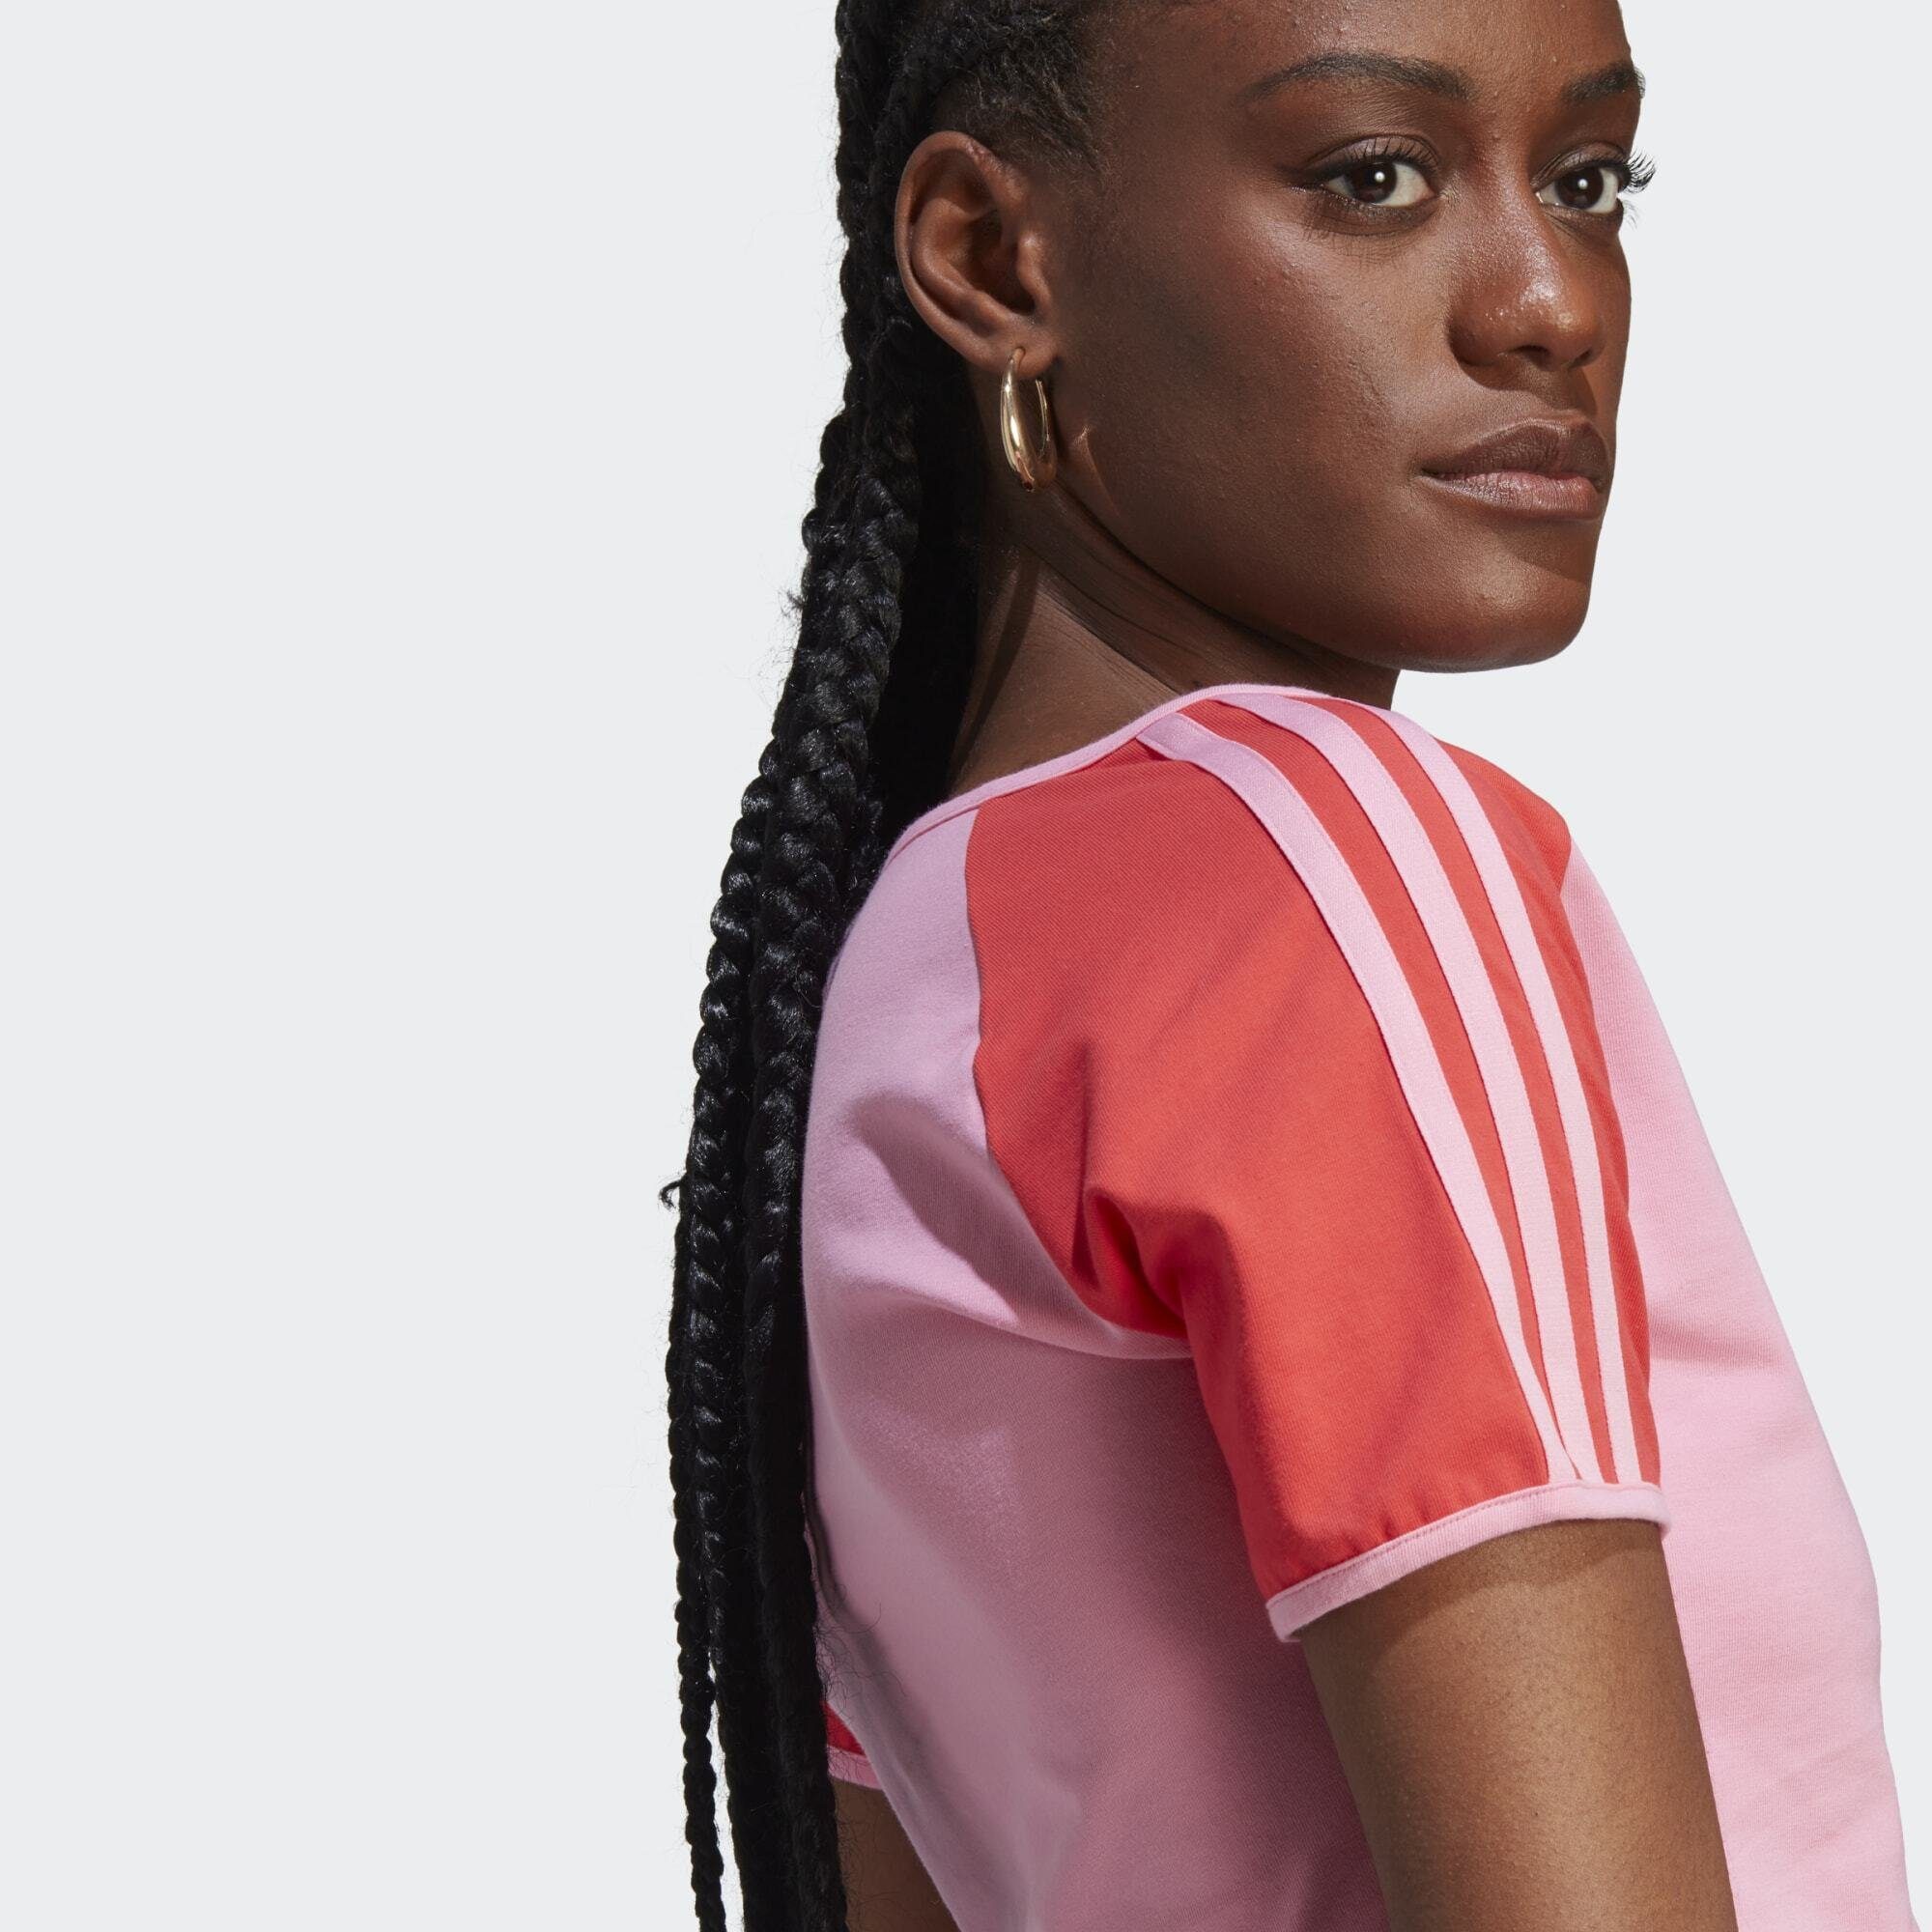 adidas Glow CLUB ISLAND Semi T-SHIRT Originals Pink SHORT / Coral T-Shirt Real